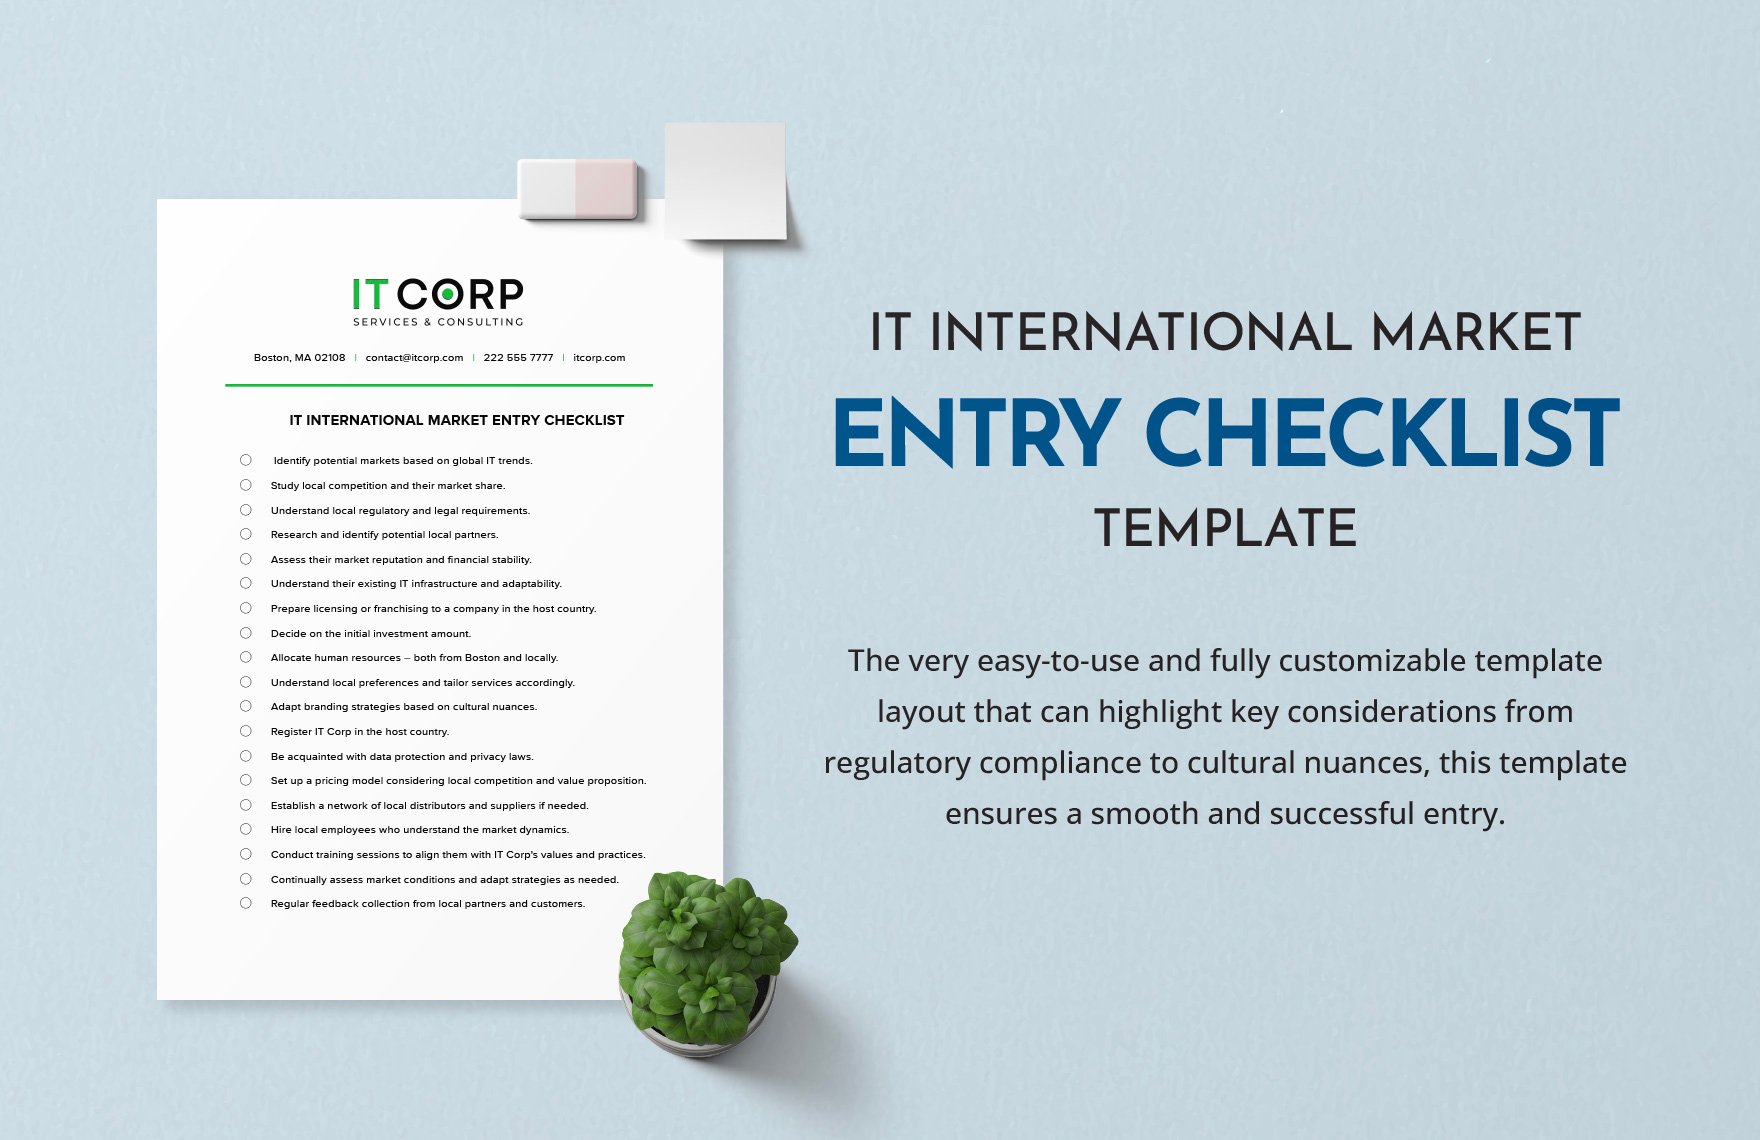 IT International Market Entry Checklist Template